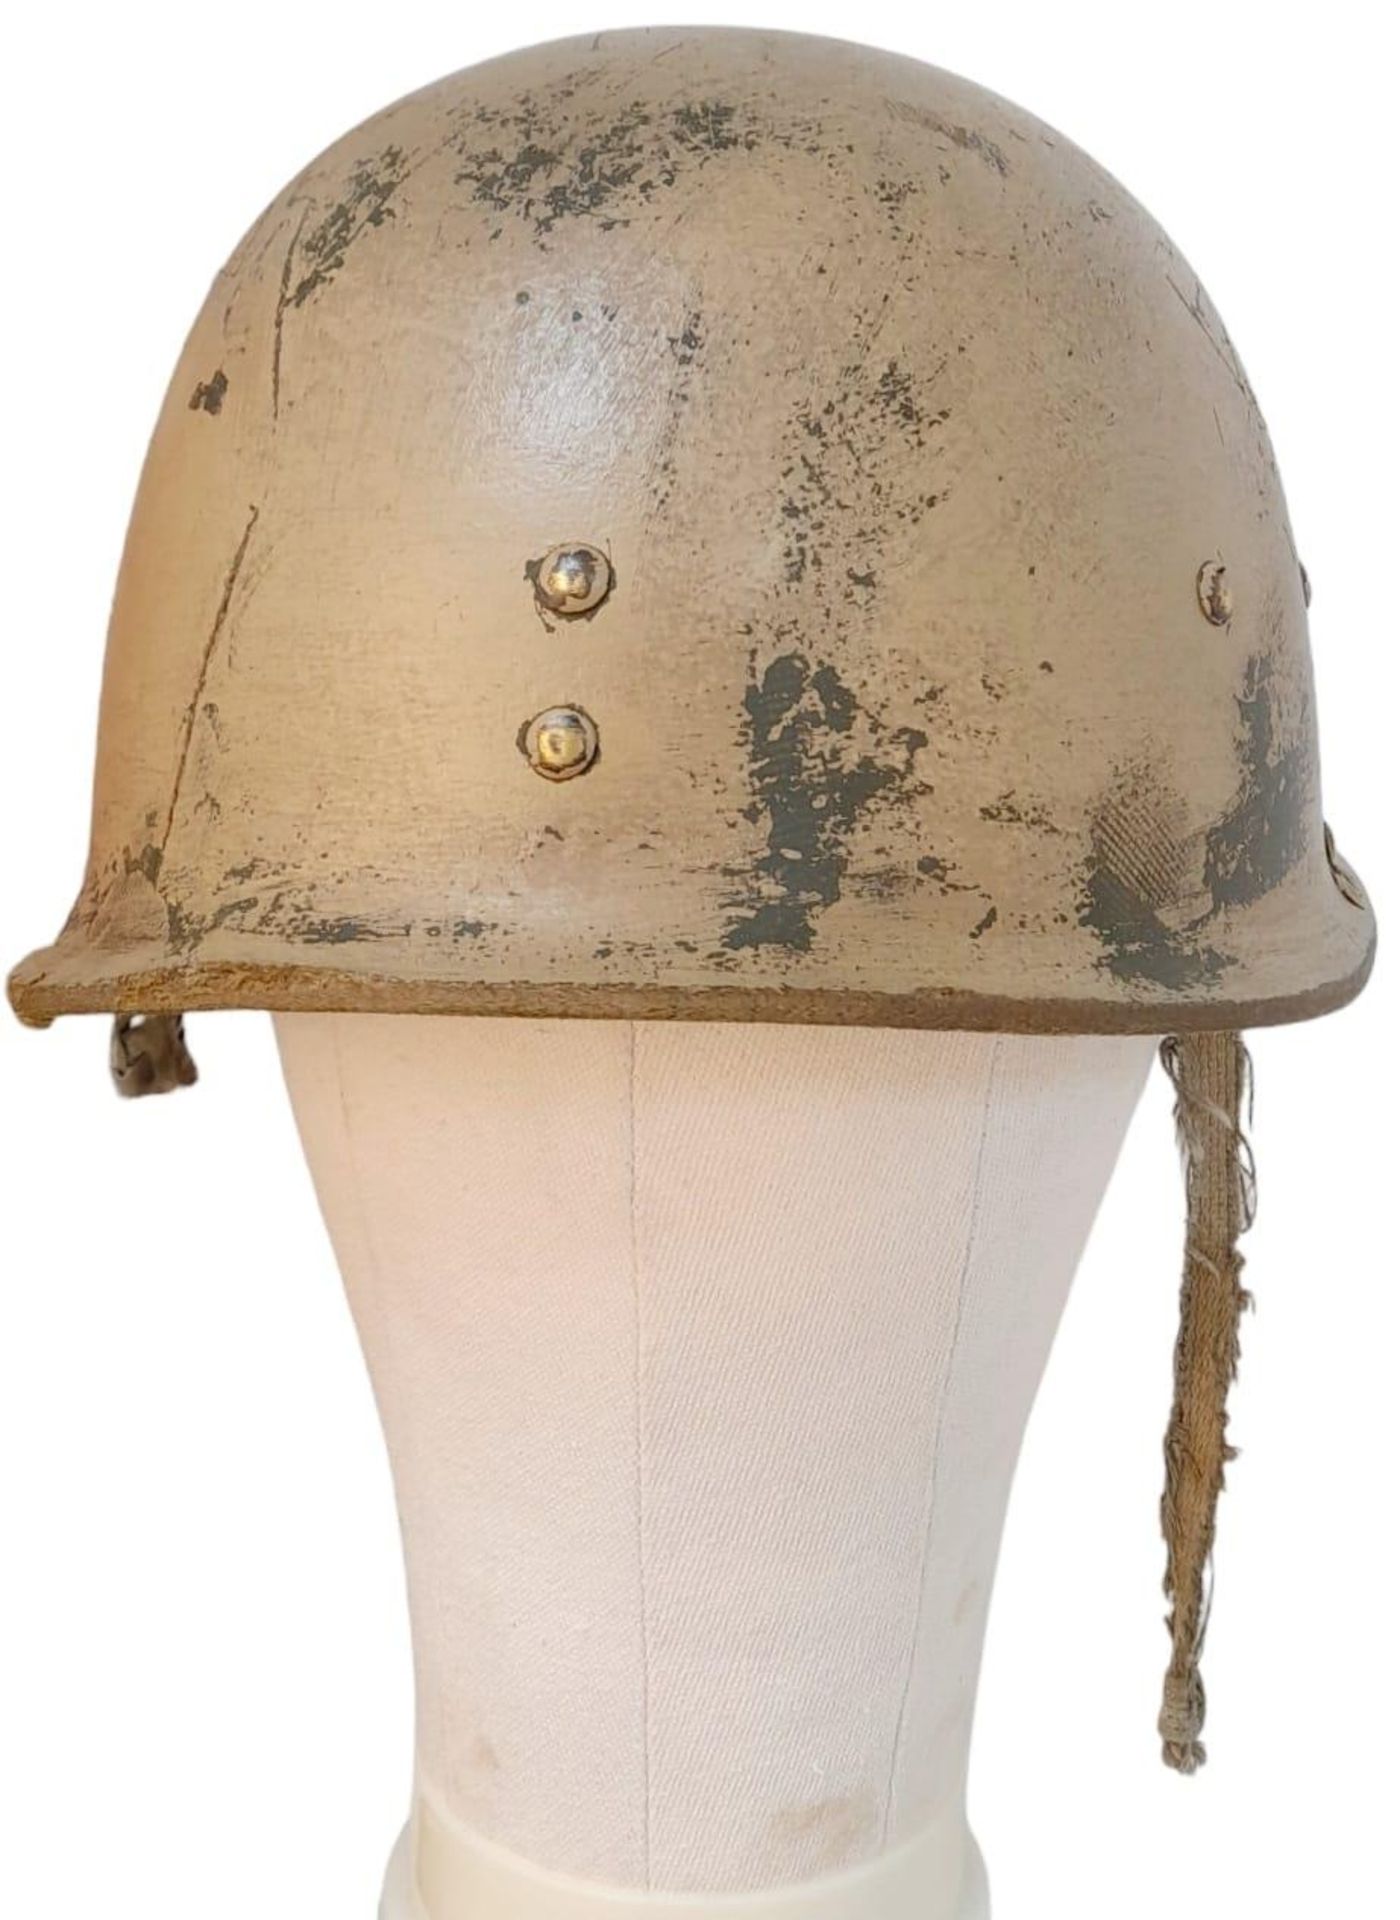 Gulf War 1 (Desert Storm) Iraqi M80 Imperial Guard Helmet. - Image 3 of 4